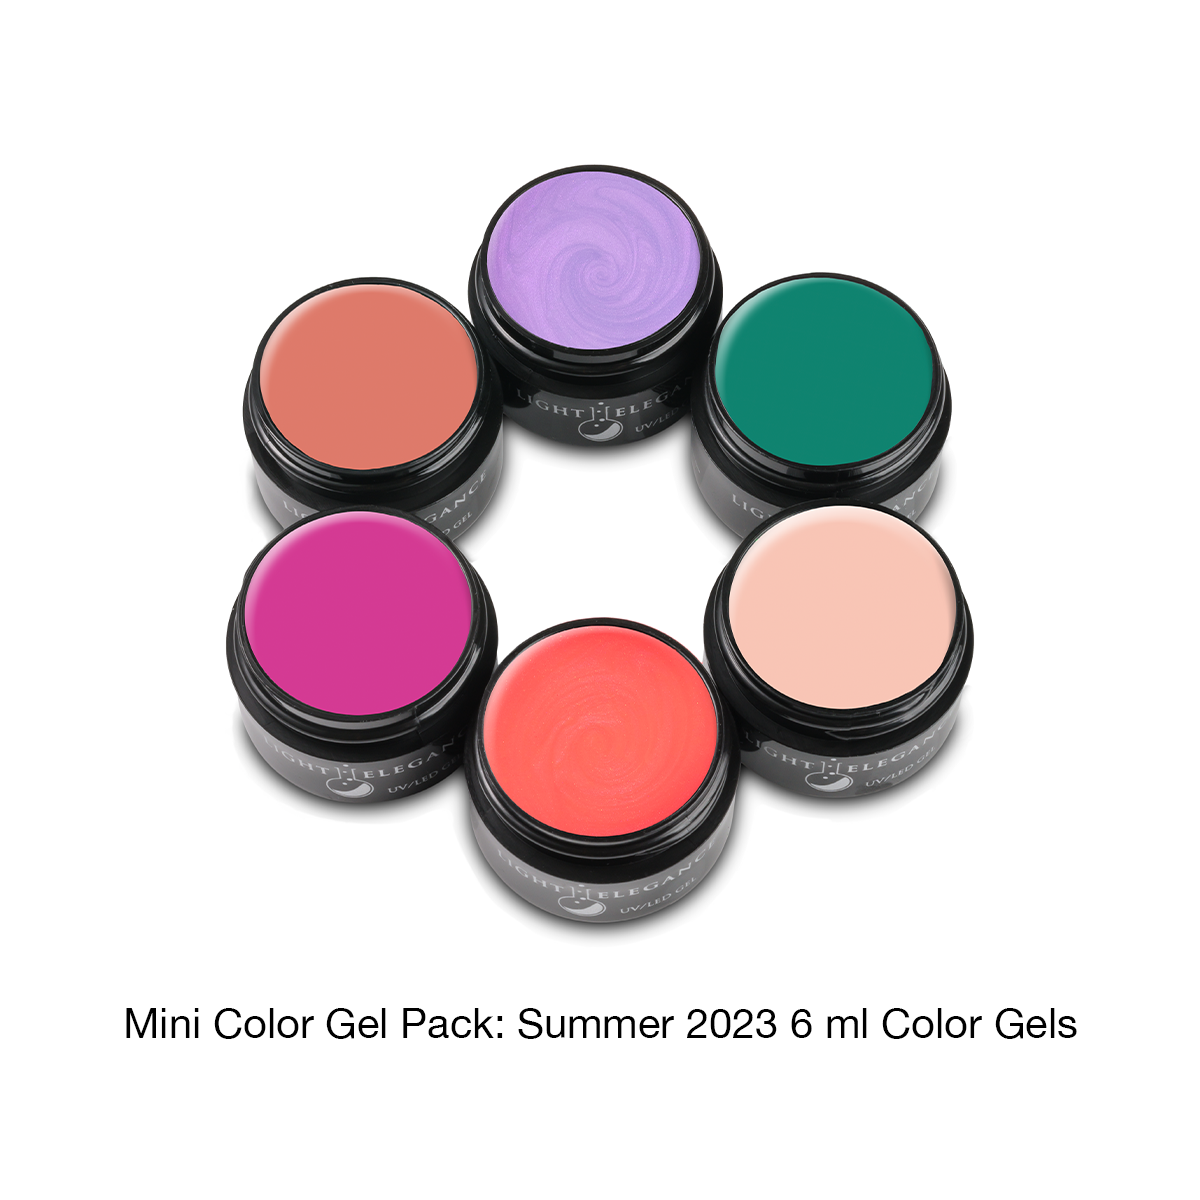 NEW Mini Pack: Viva La Fiesta Summer 2023 Color Gels (6 ml)